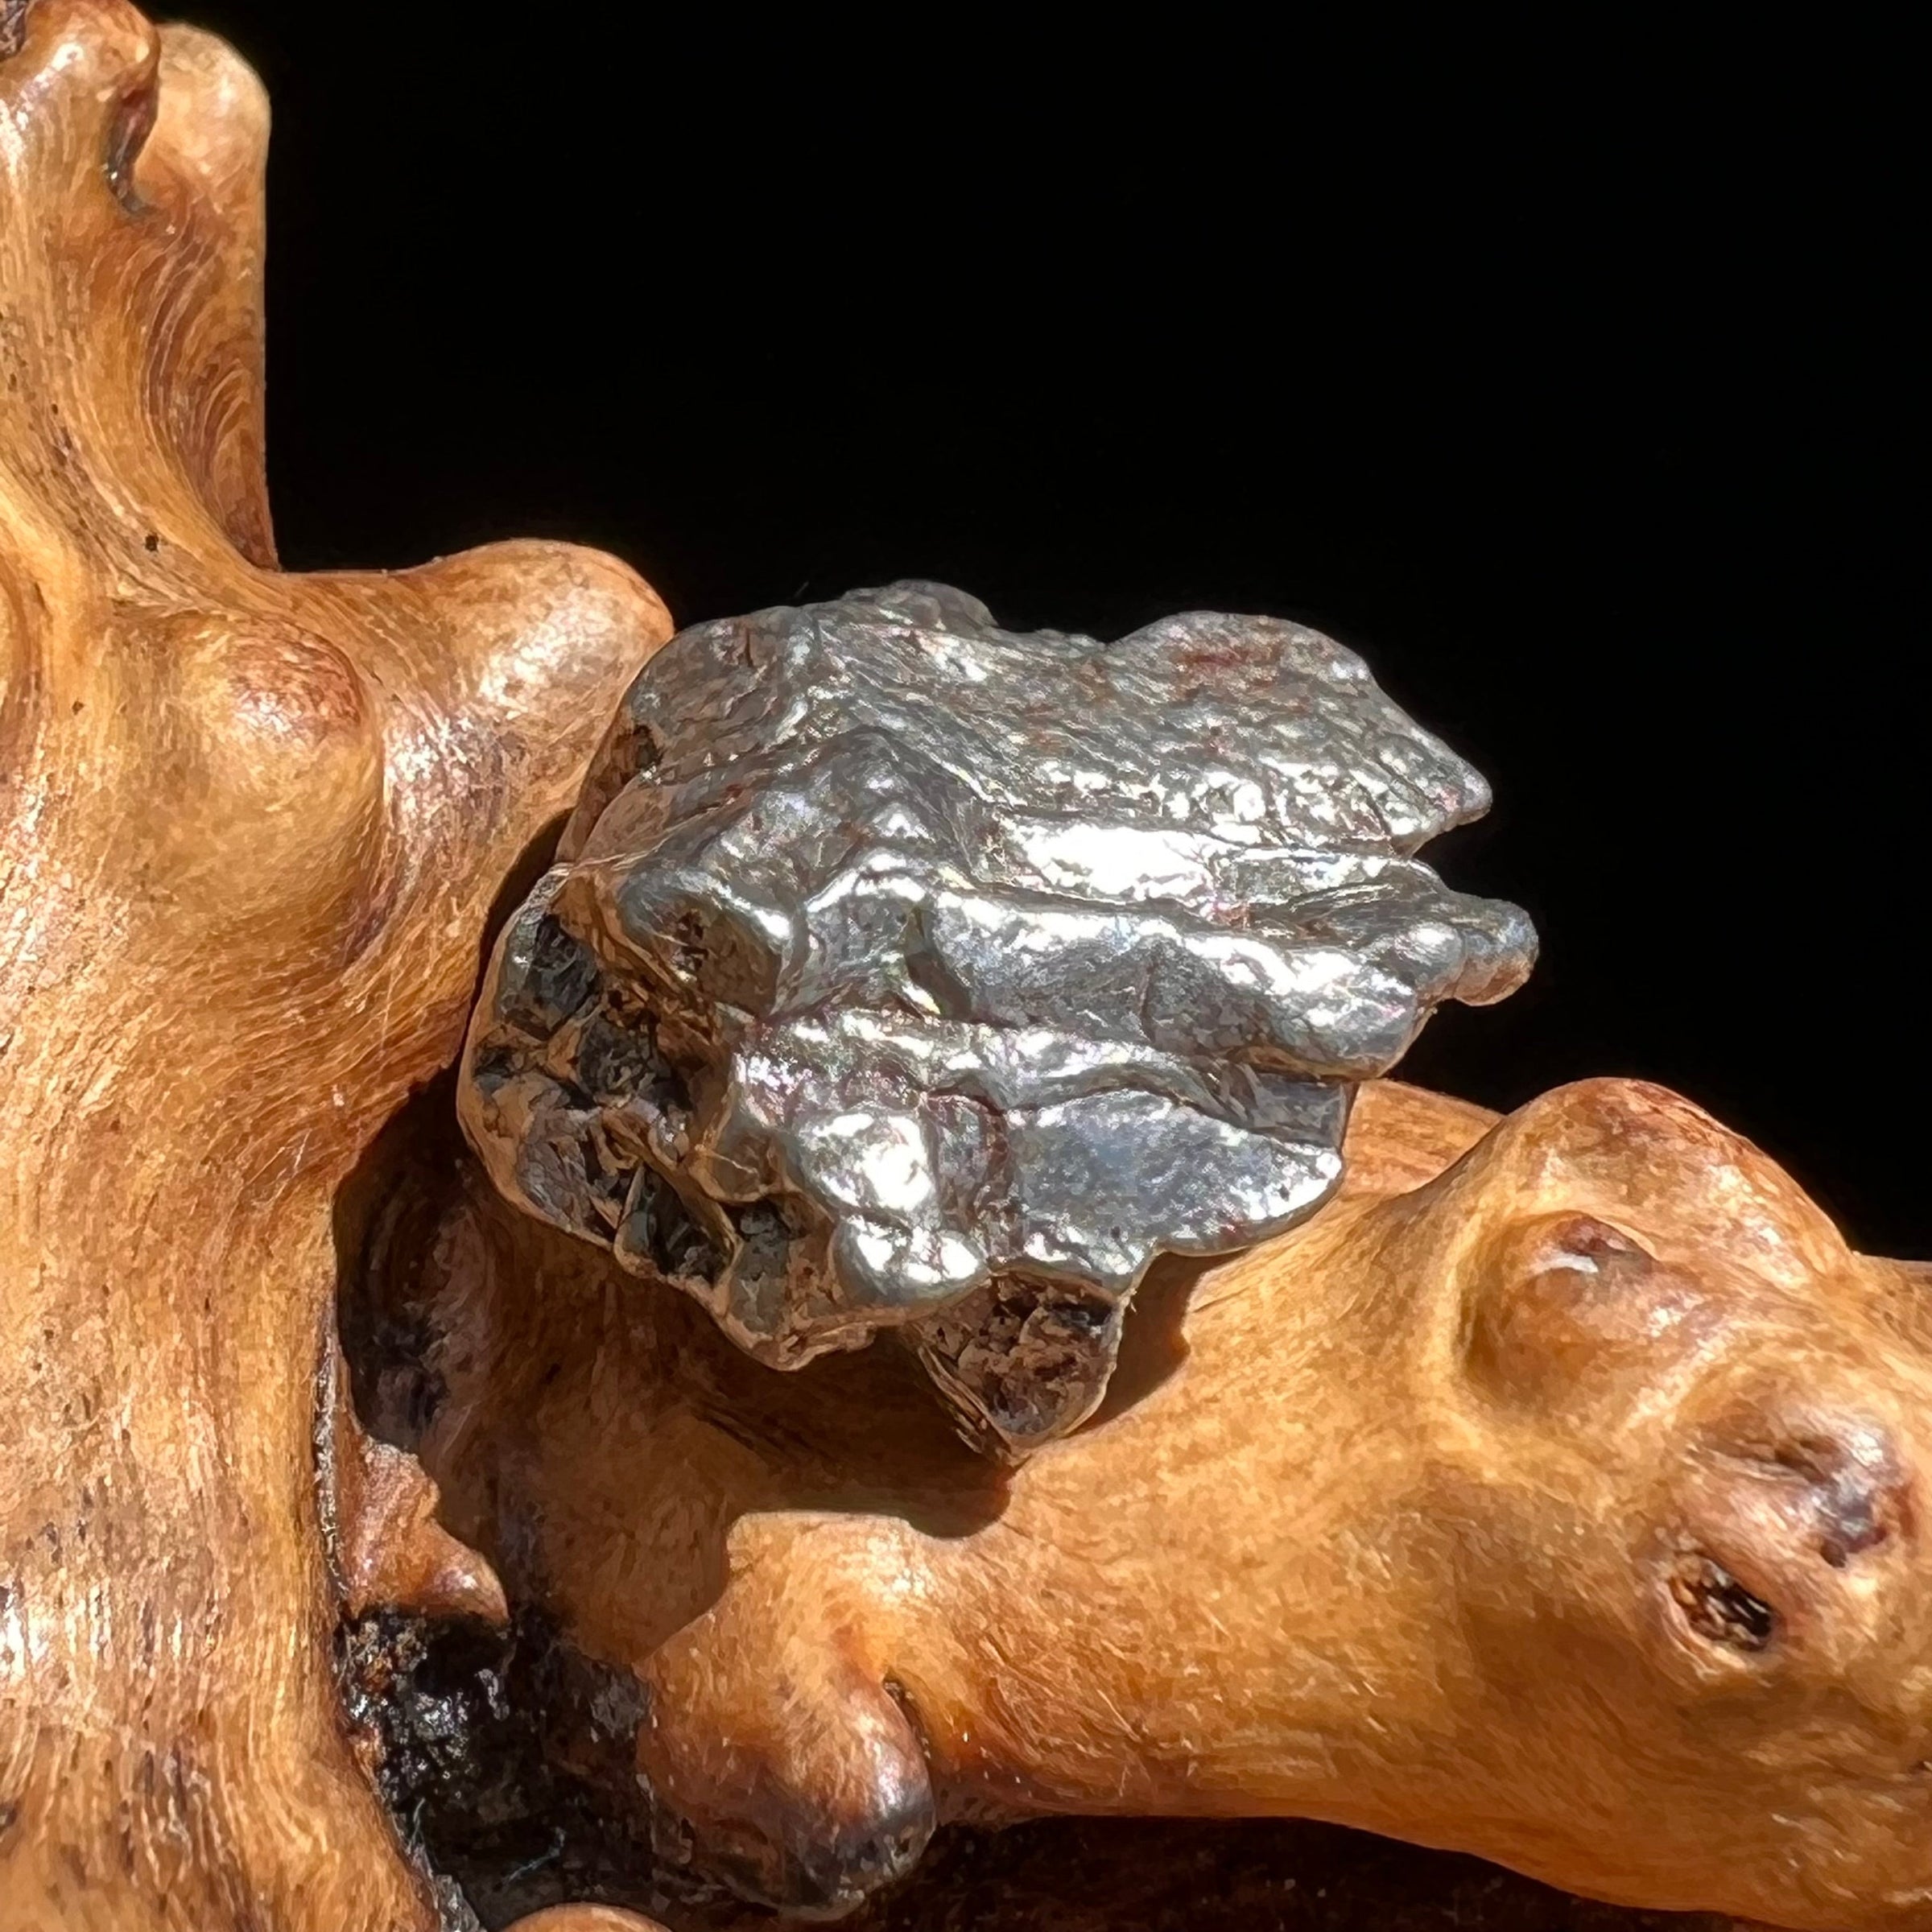 Campo Del Cielo Meteorite 21.3 grams #76-Moldavite Life